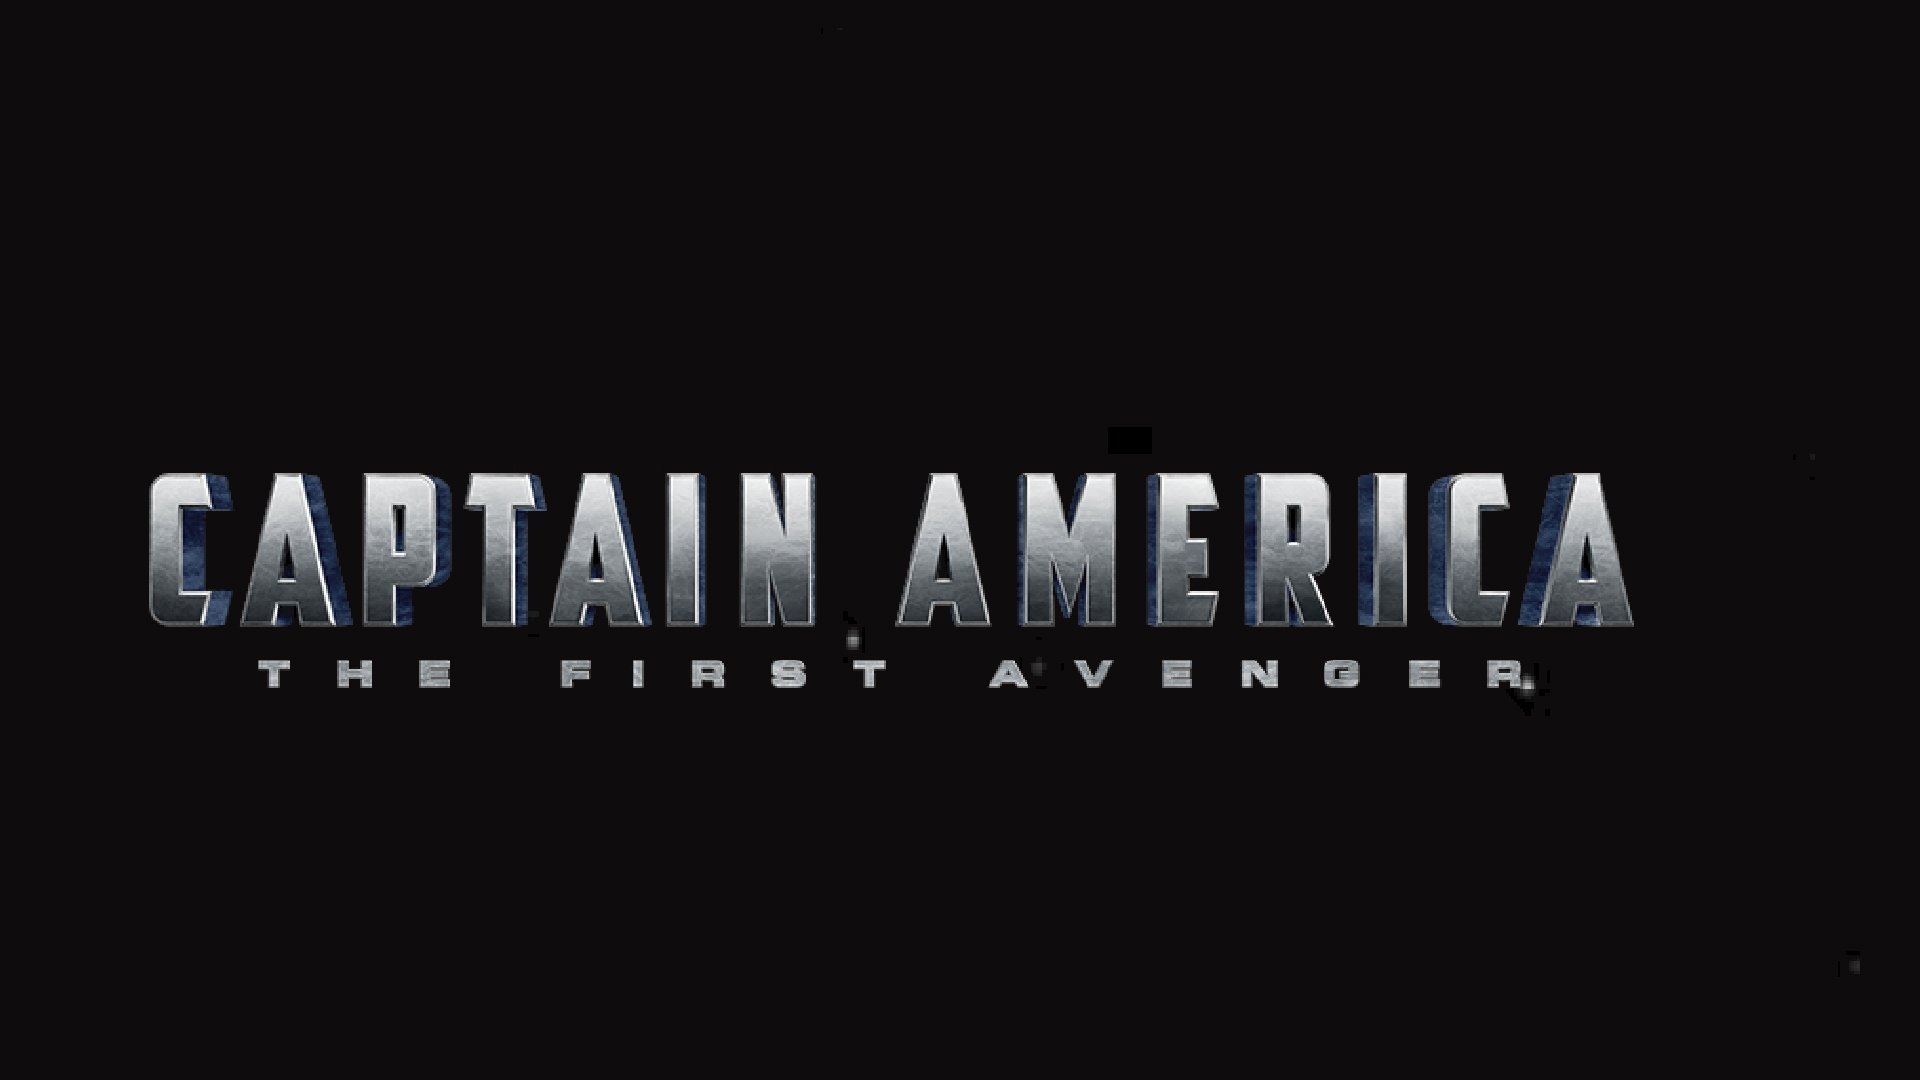 Download full hd 1920x1080 Captain America: The First Avenger desktop wallpaper ID:497156 for free